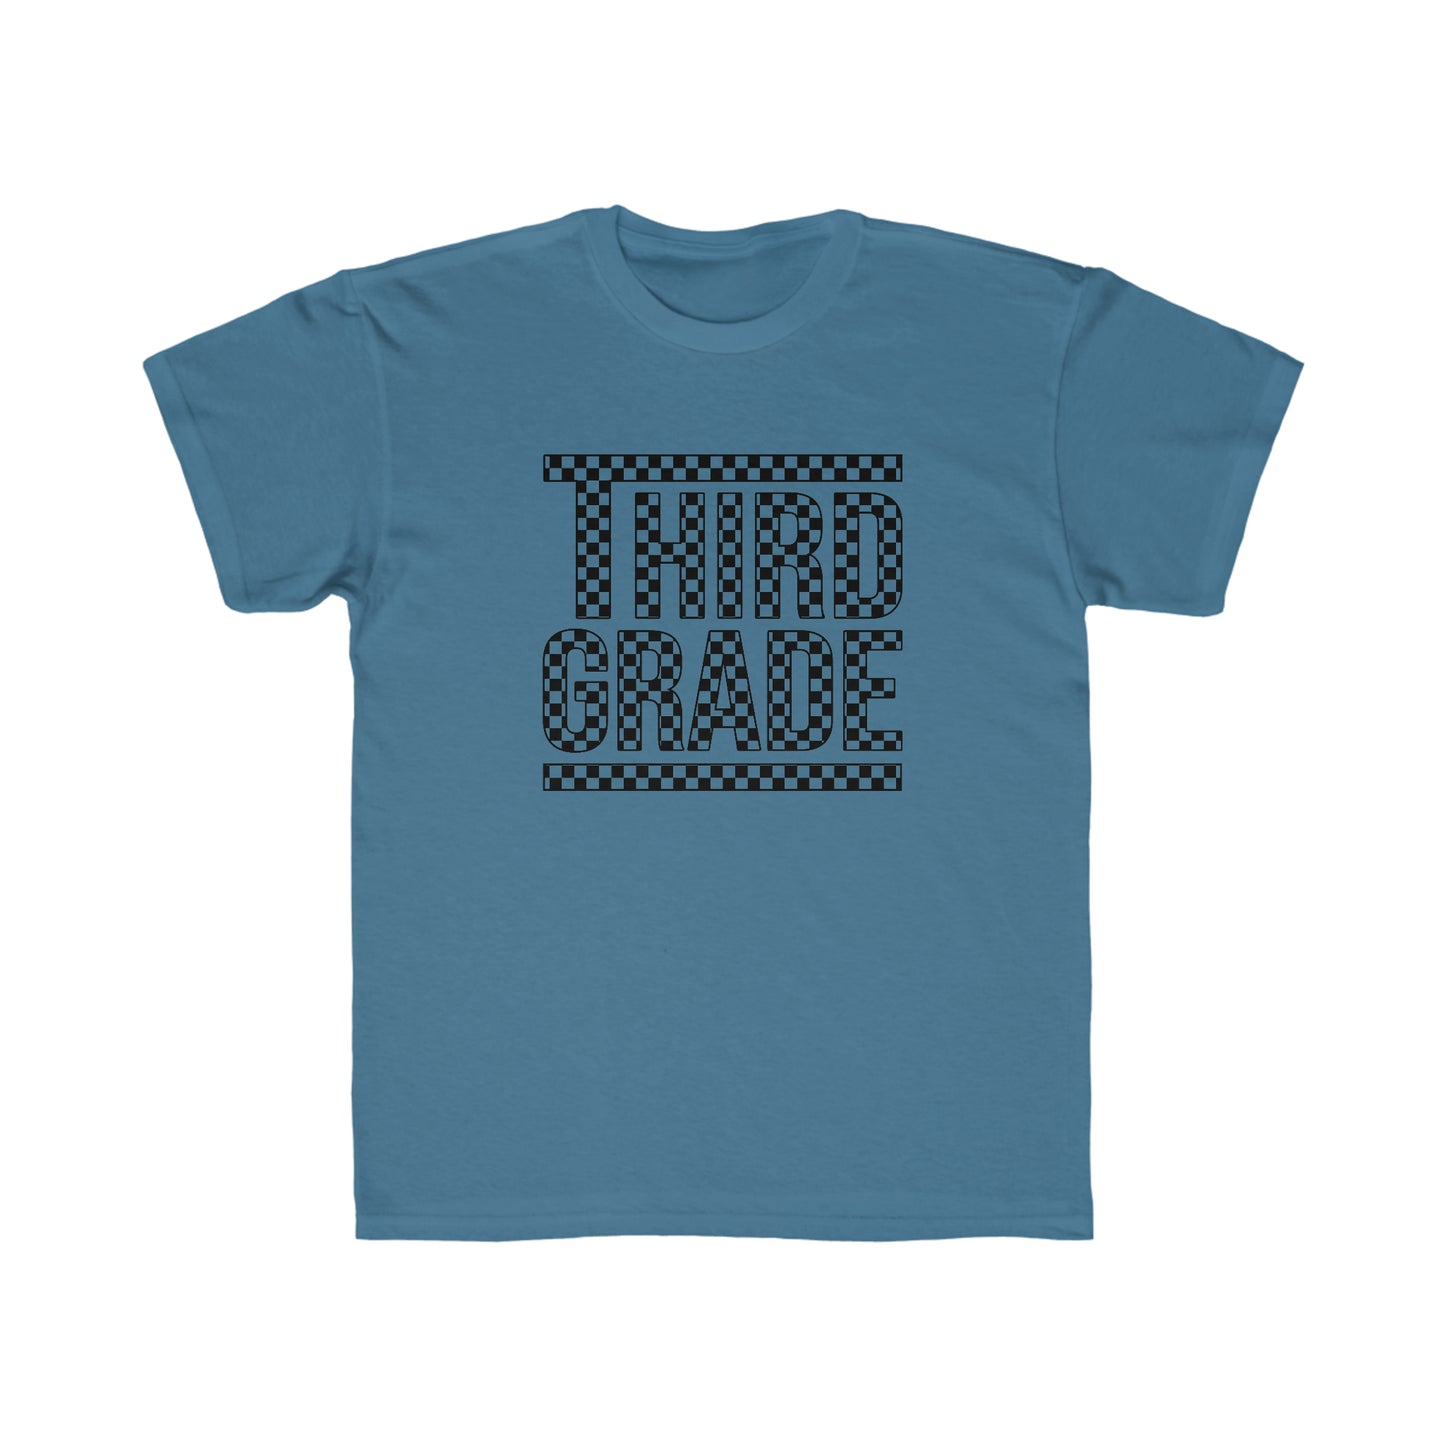 Third Grade Checker - Youth